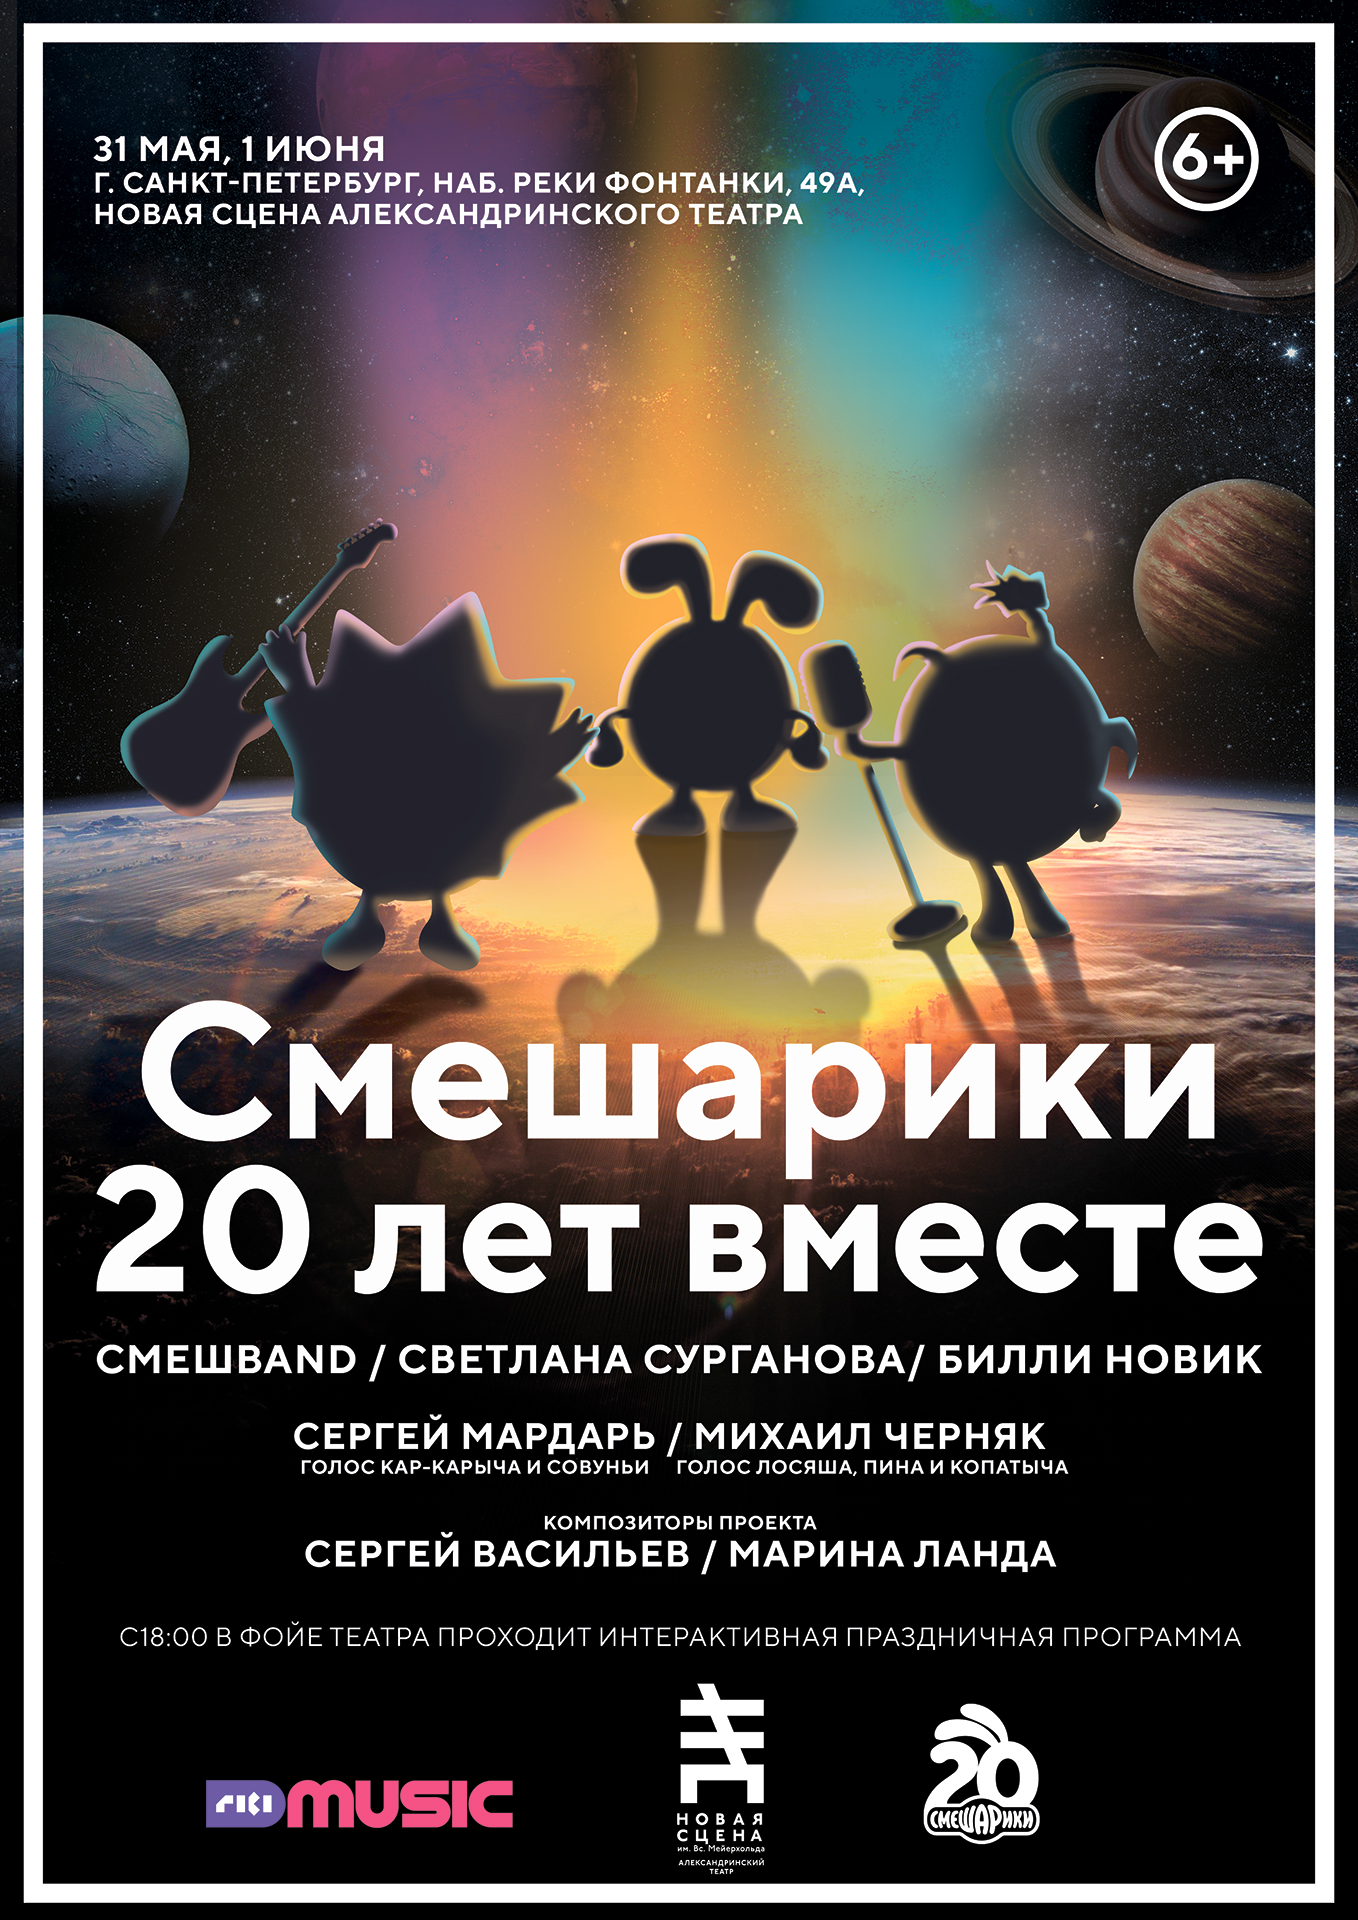 20th-Aniiversary-Kikoriki-Aleksandrinsky-Theater